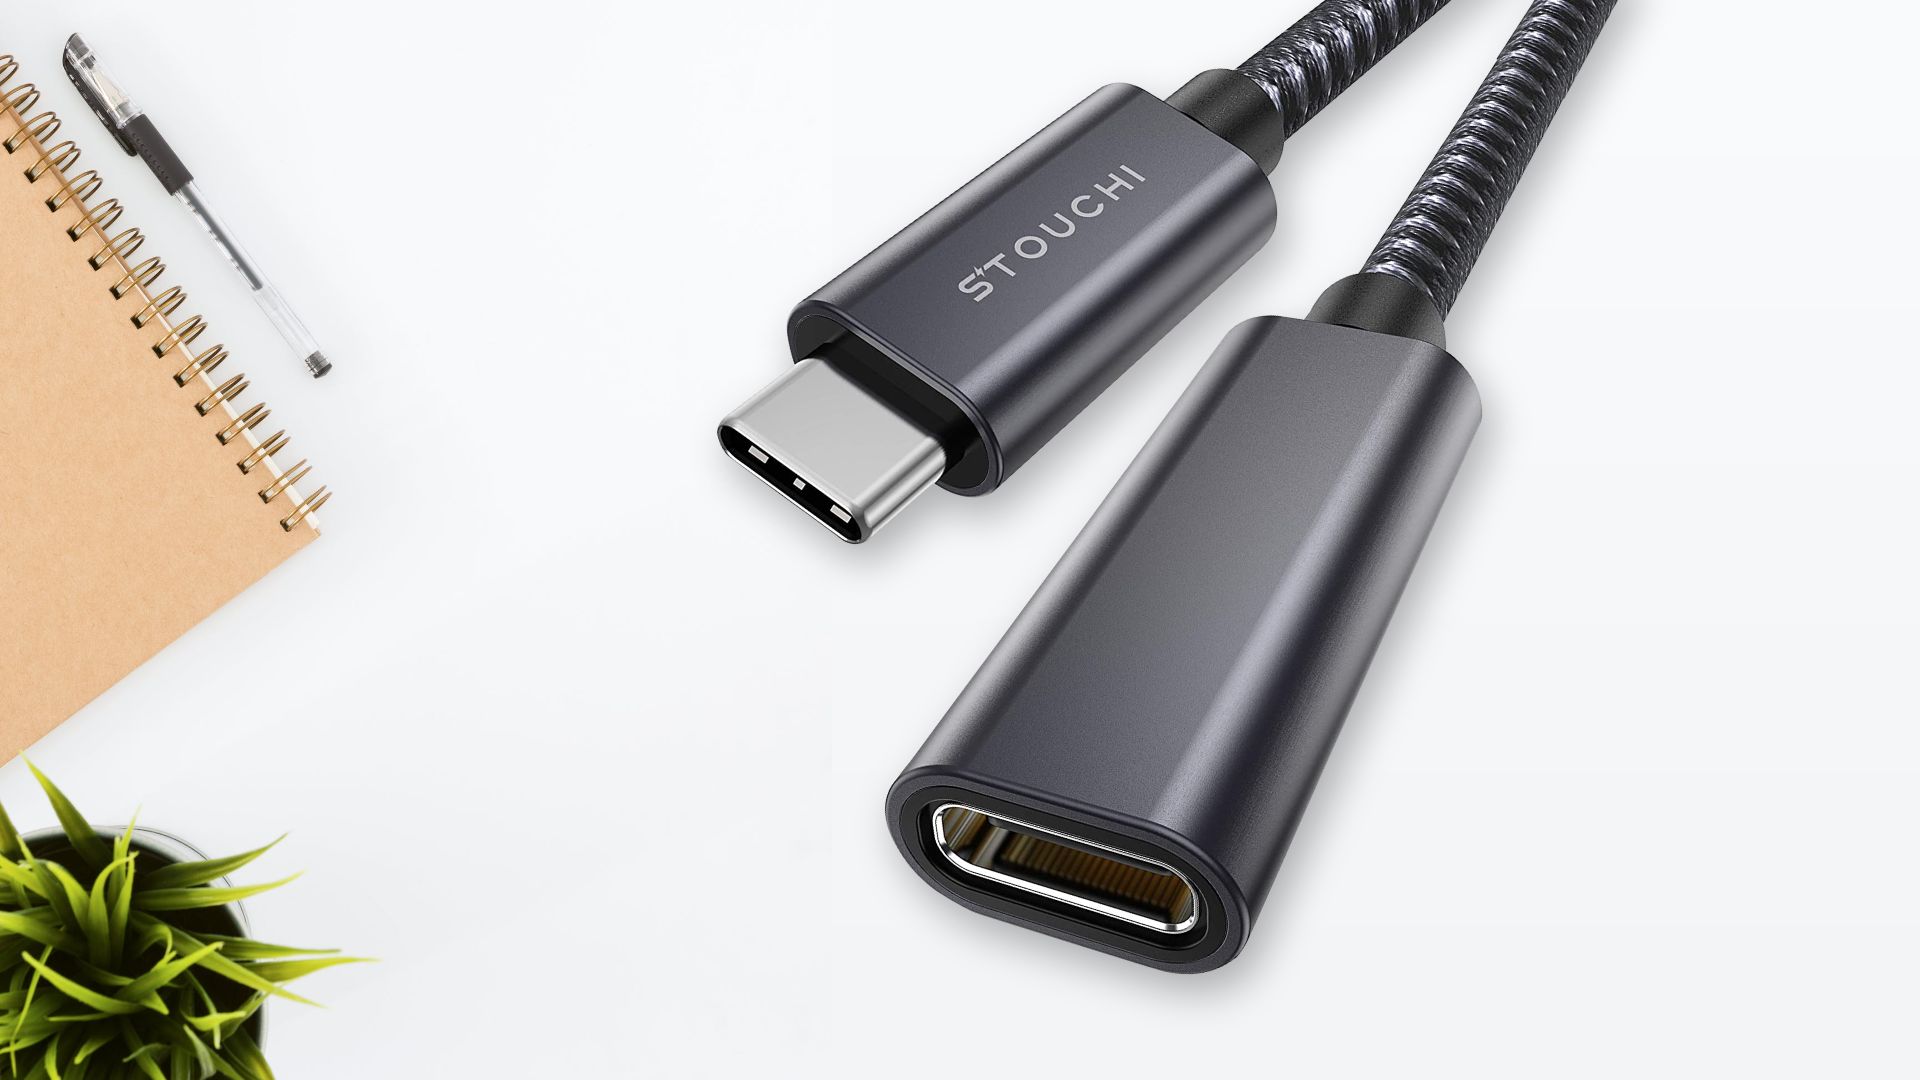 Stouchi USB C extension cable